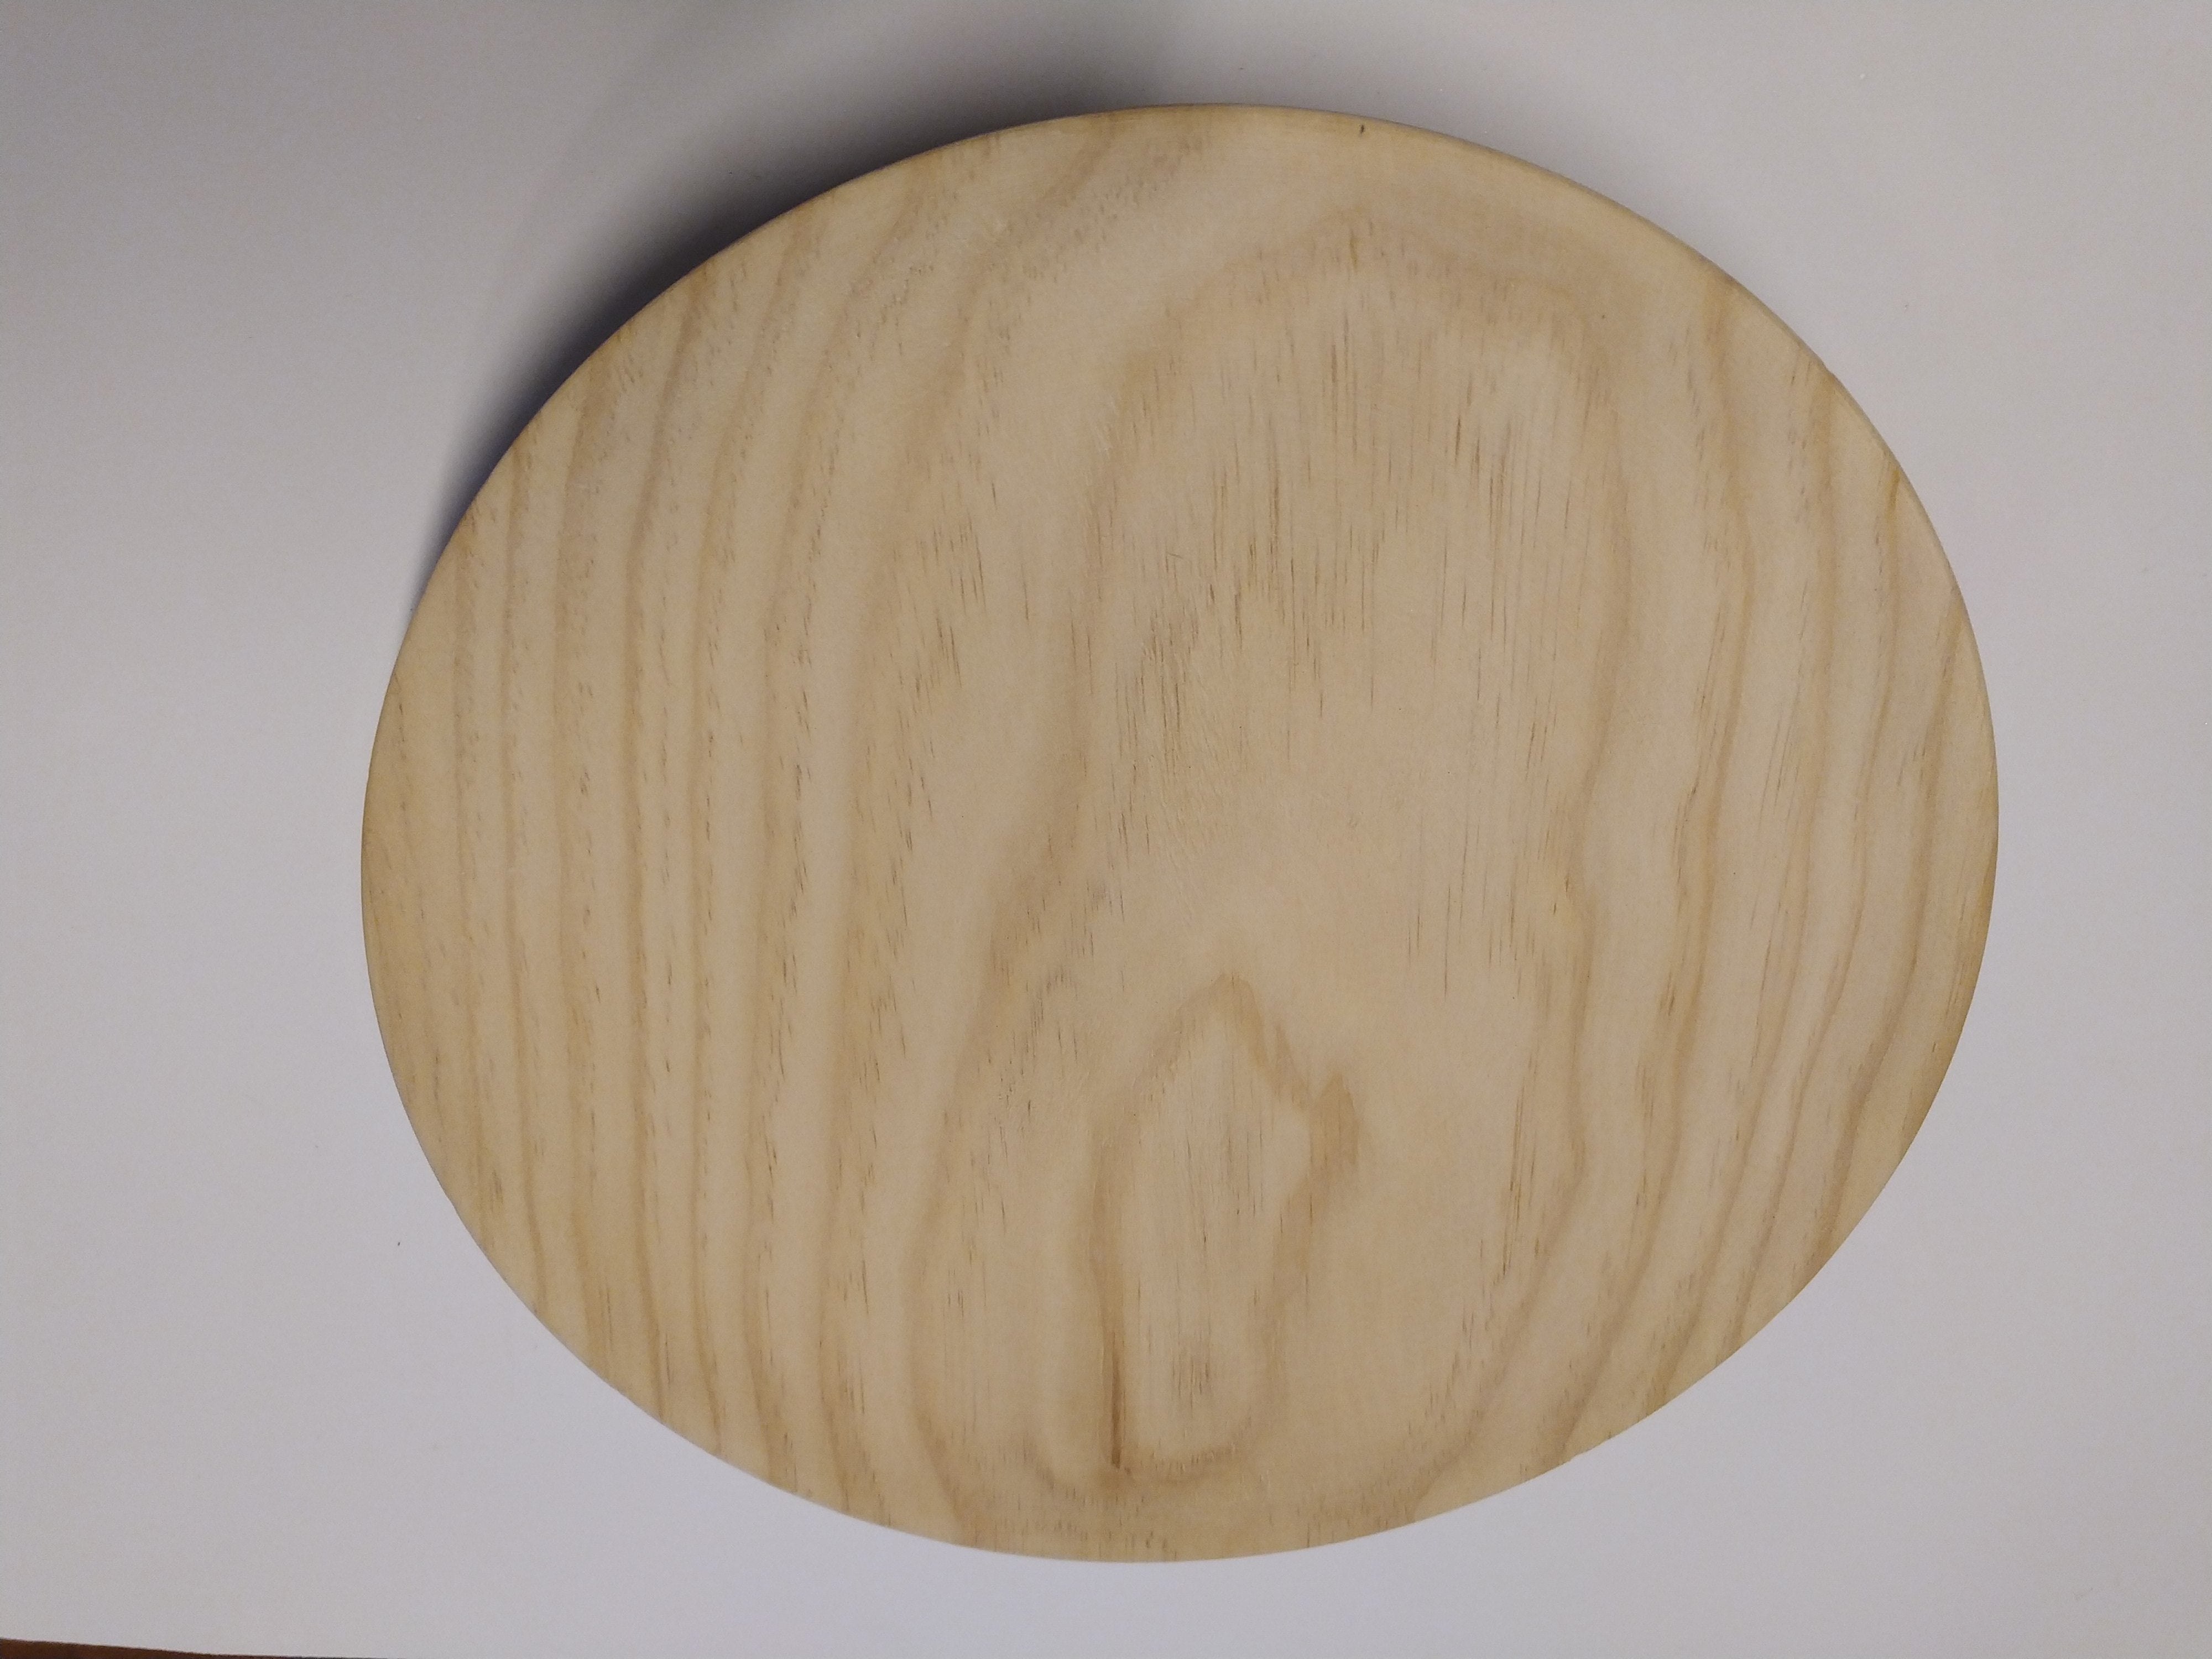 Tapa giratortillas de madera, diámetro 23,5 cm. Plato volteatortillas ideal  para darle la vuelta a la tortilla fácilmente